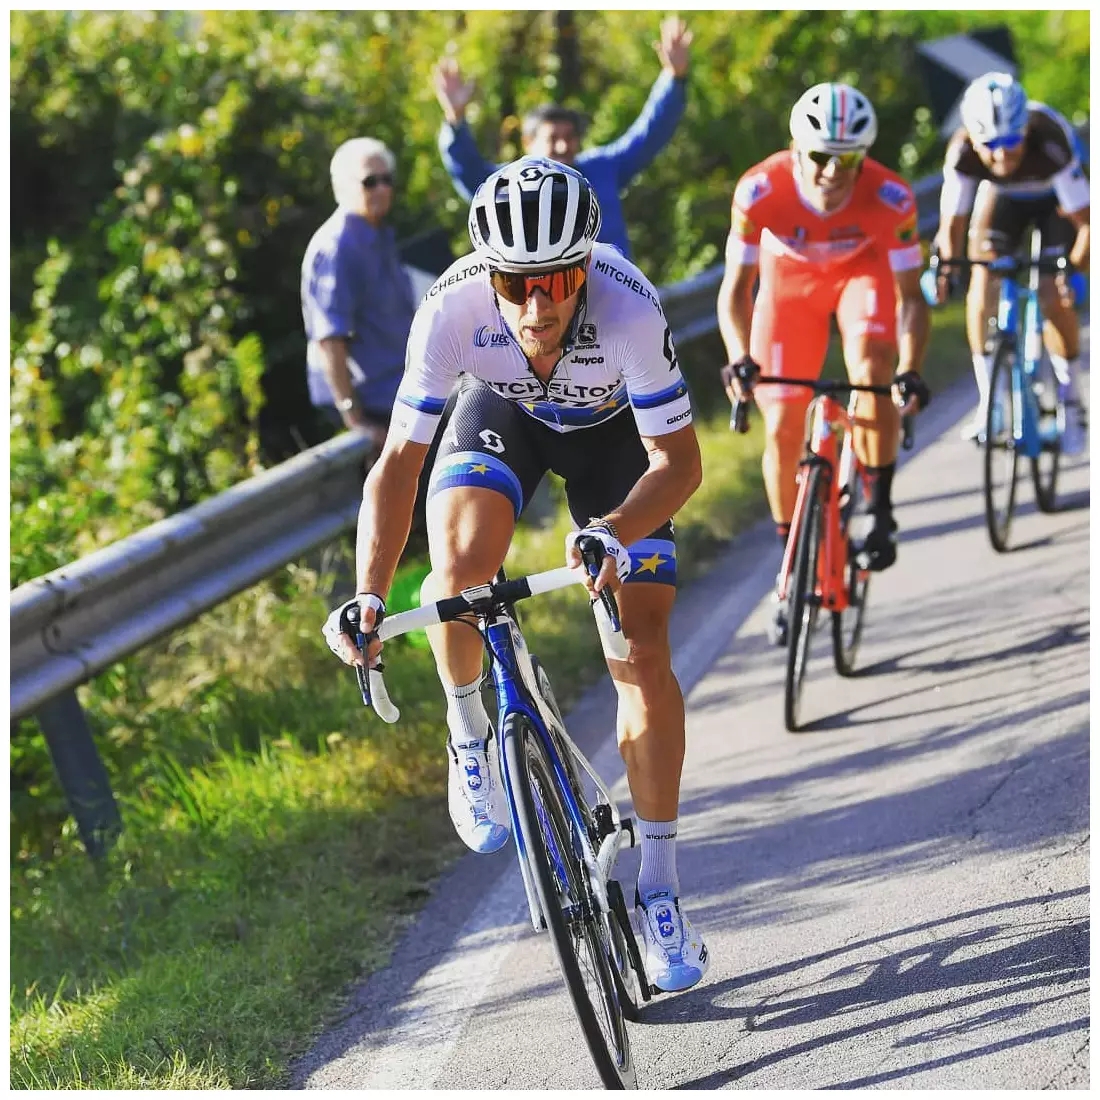 GIORDANA VERO PRO SCOTT MITCHELTON EUROPEAN CHAMPION cycling jersey